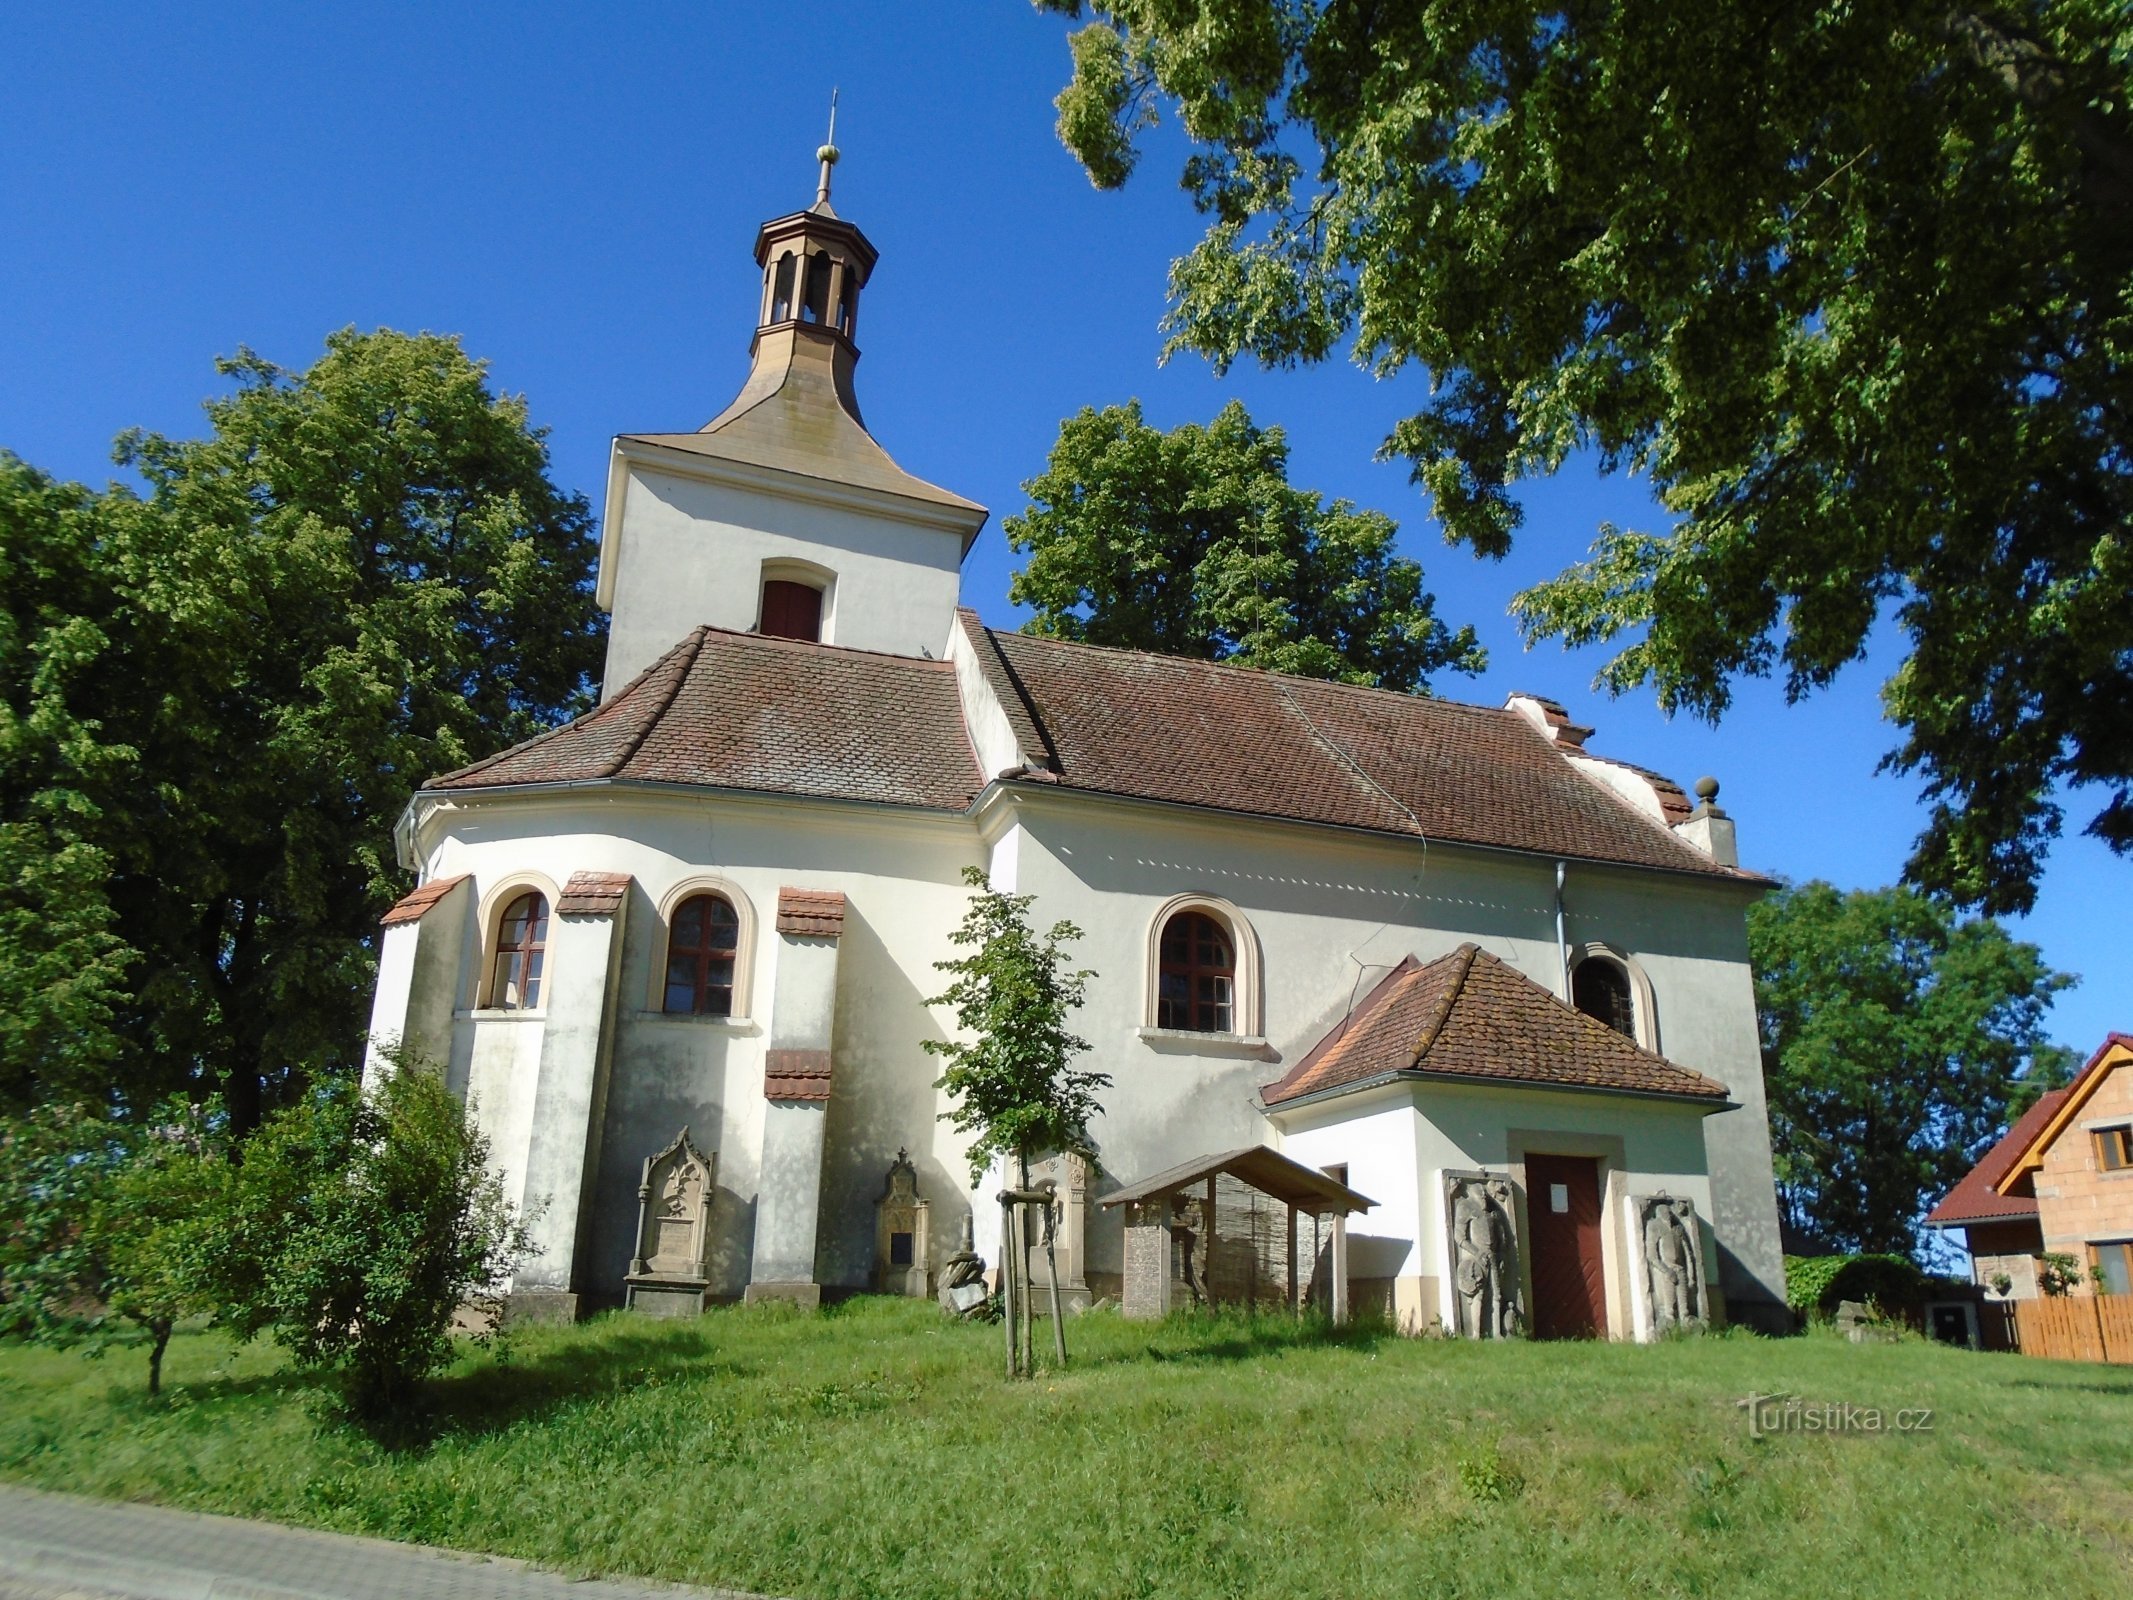 Nhà thờ St. Andrew (Saint)